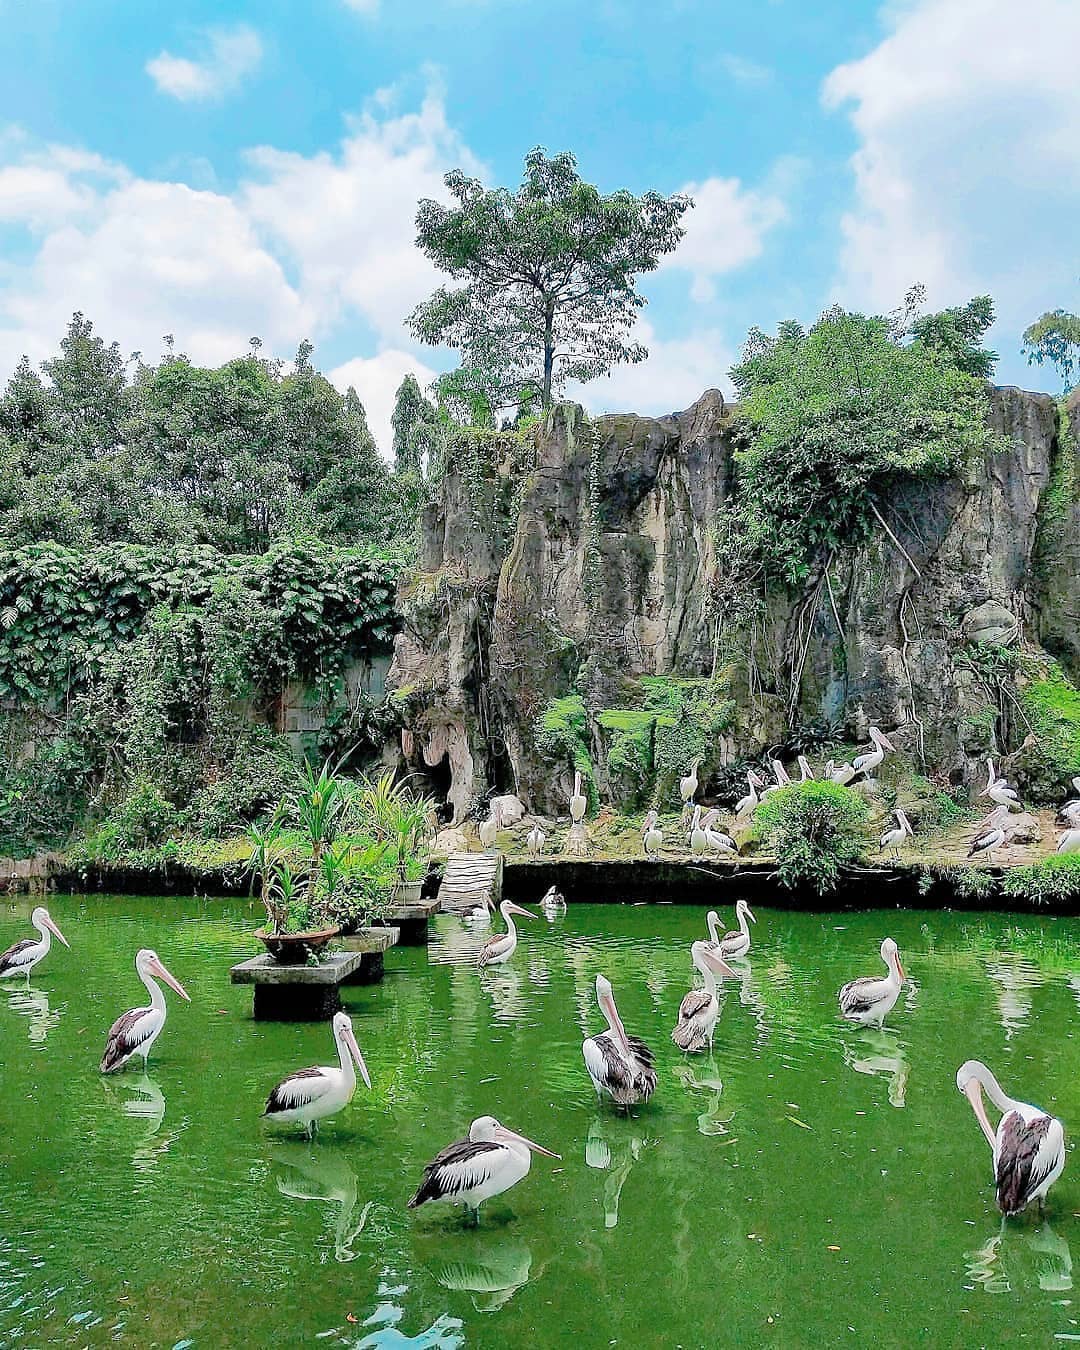 nature attractions in jakarta - ragunan zoo jakarta